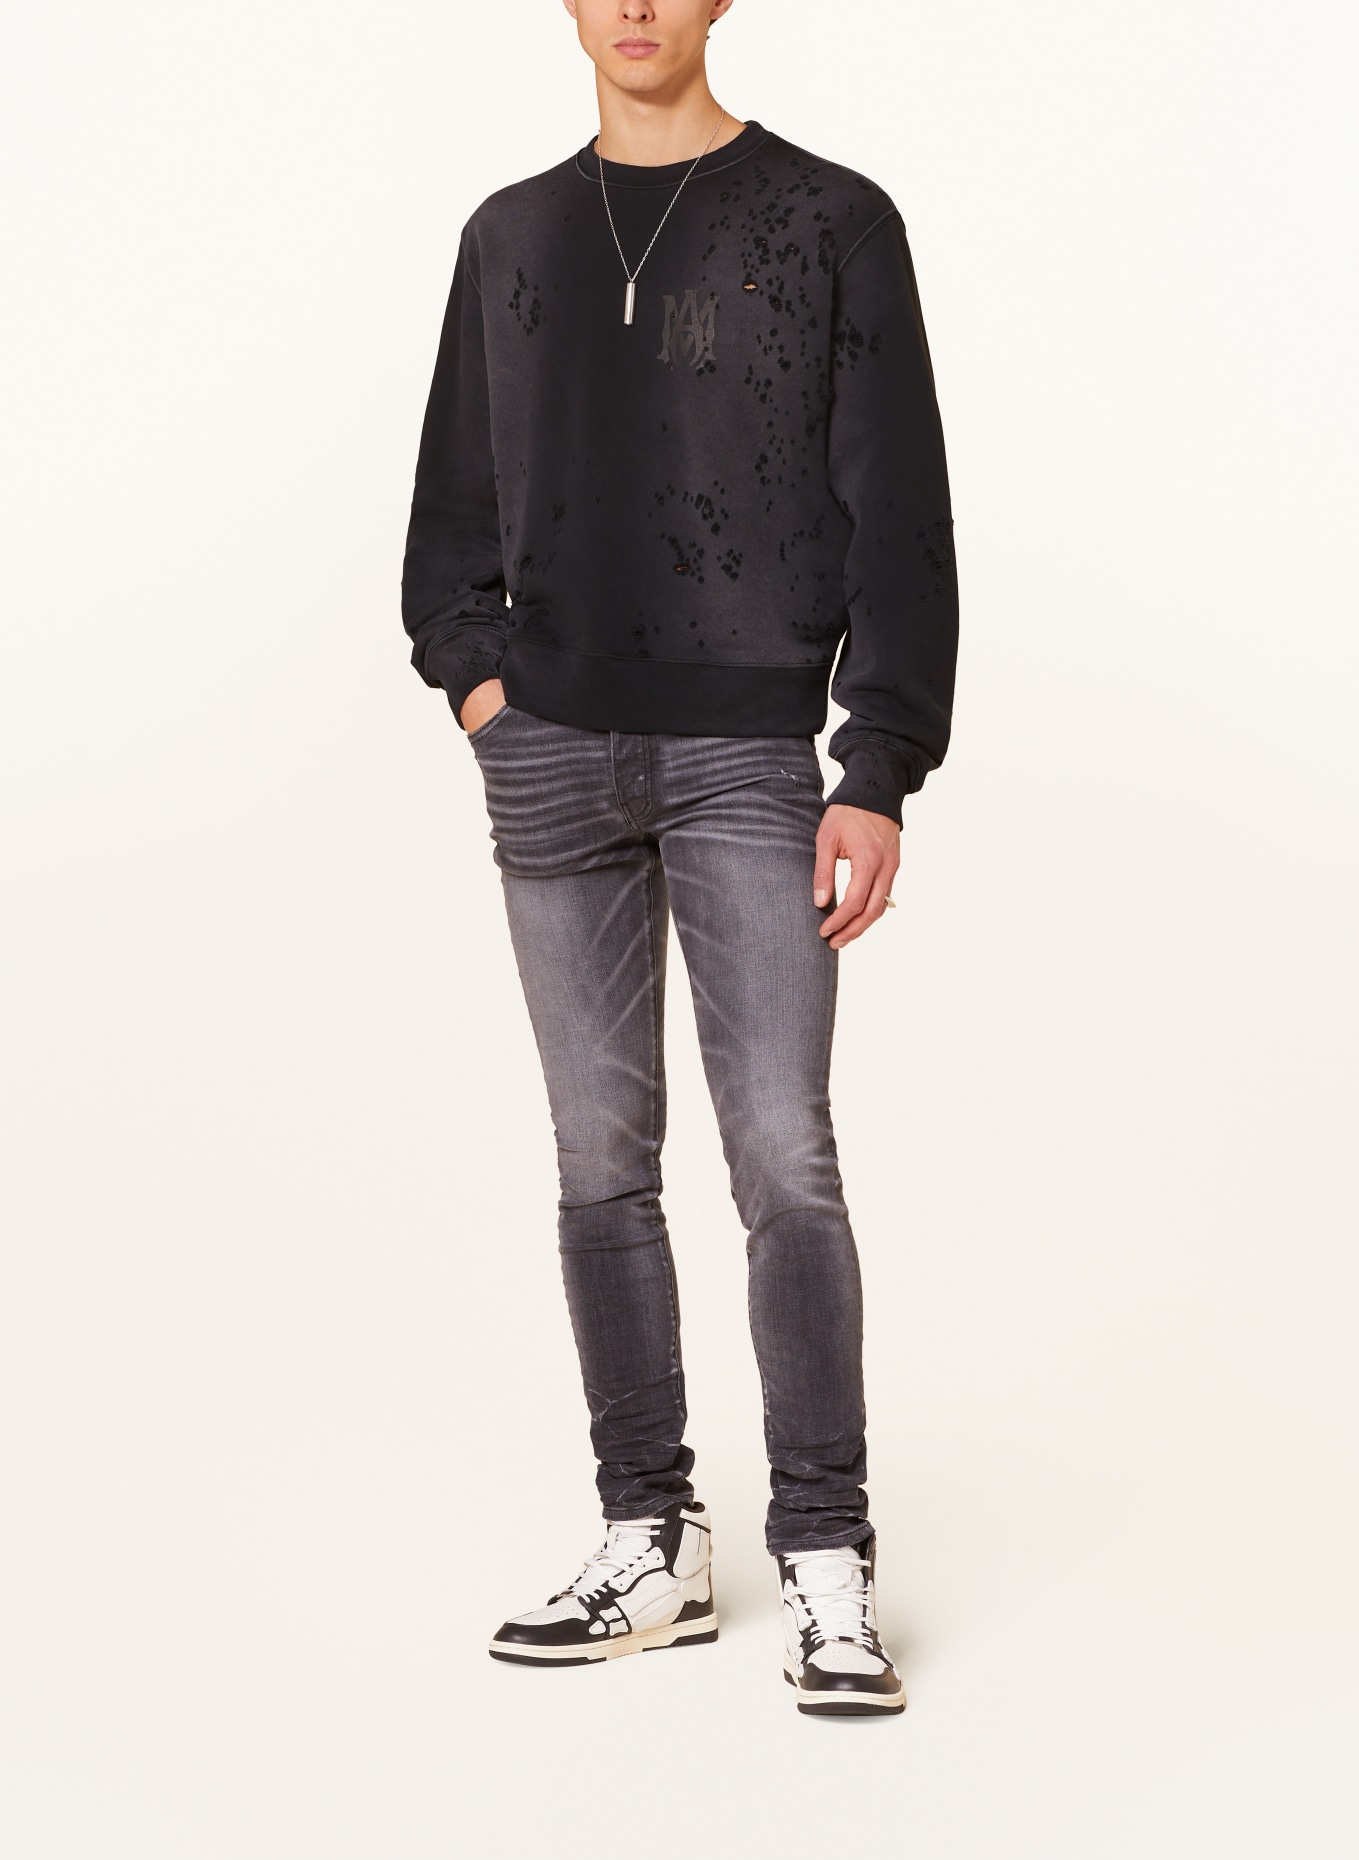 AMIRI Sweatshirt, Color: BLACK (Image 2)